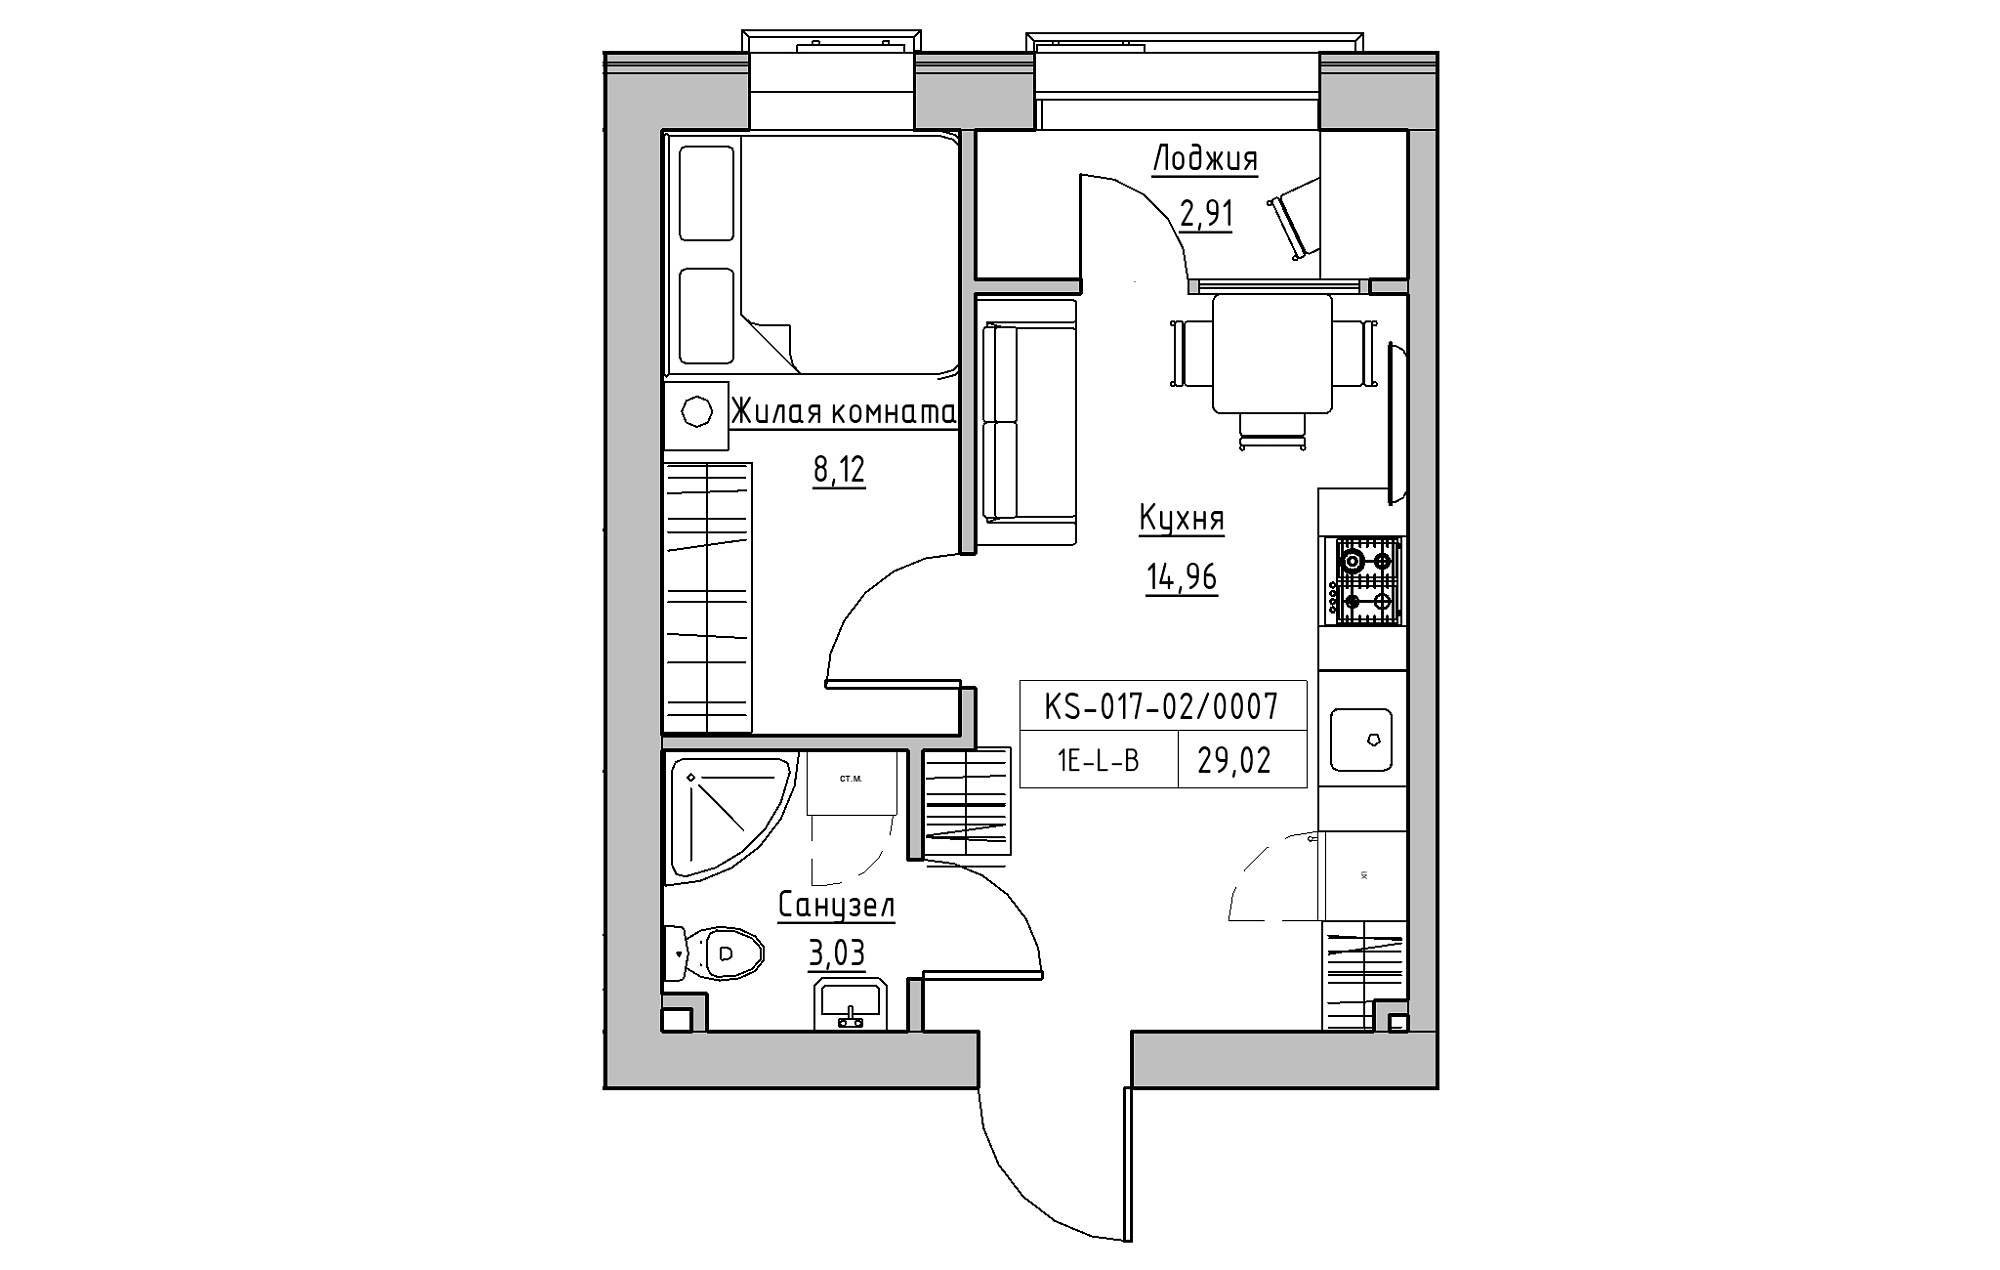 Planning 1-rm flats area 29.02m2, KS-017-02/0007.